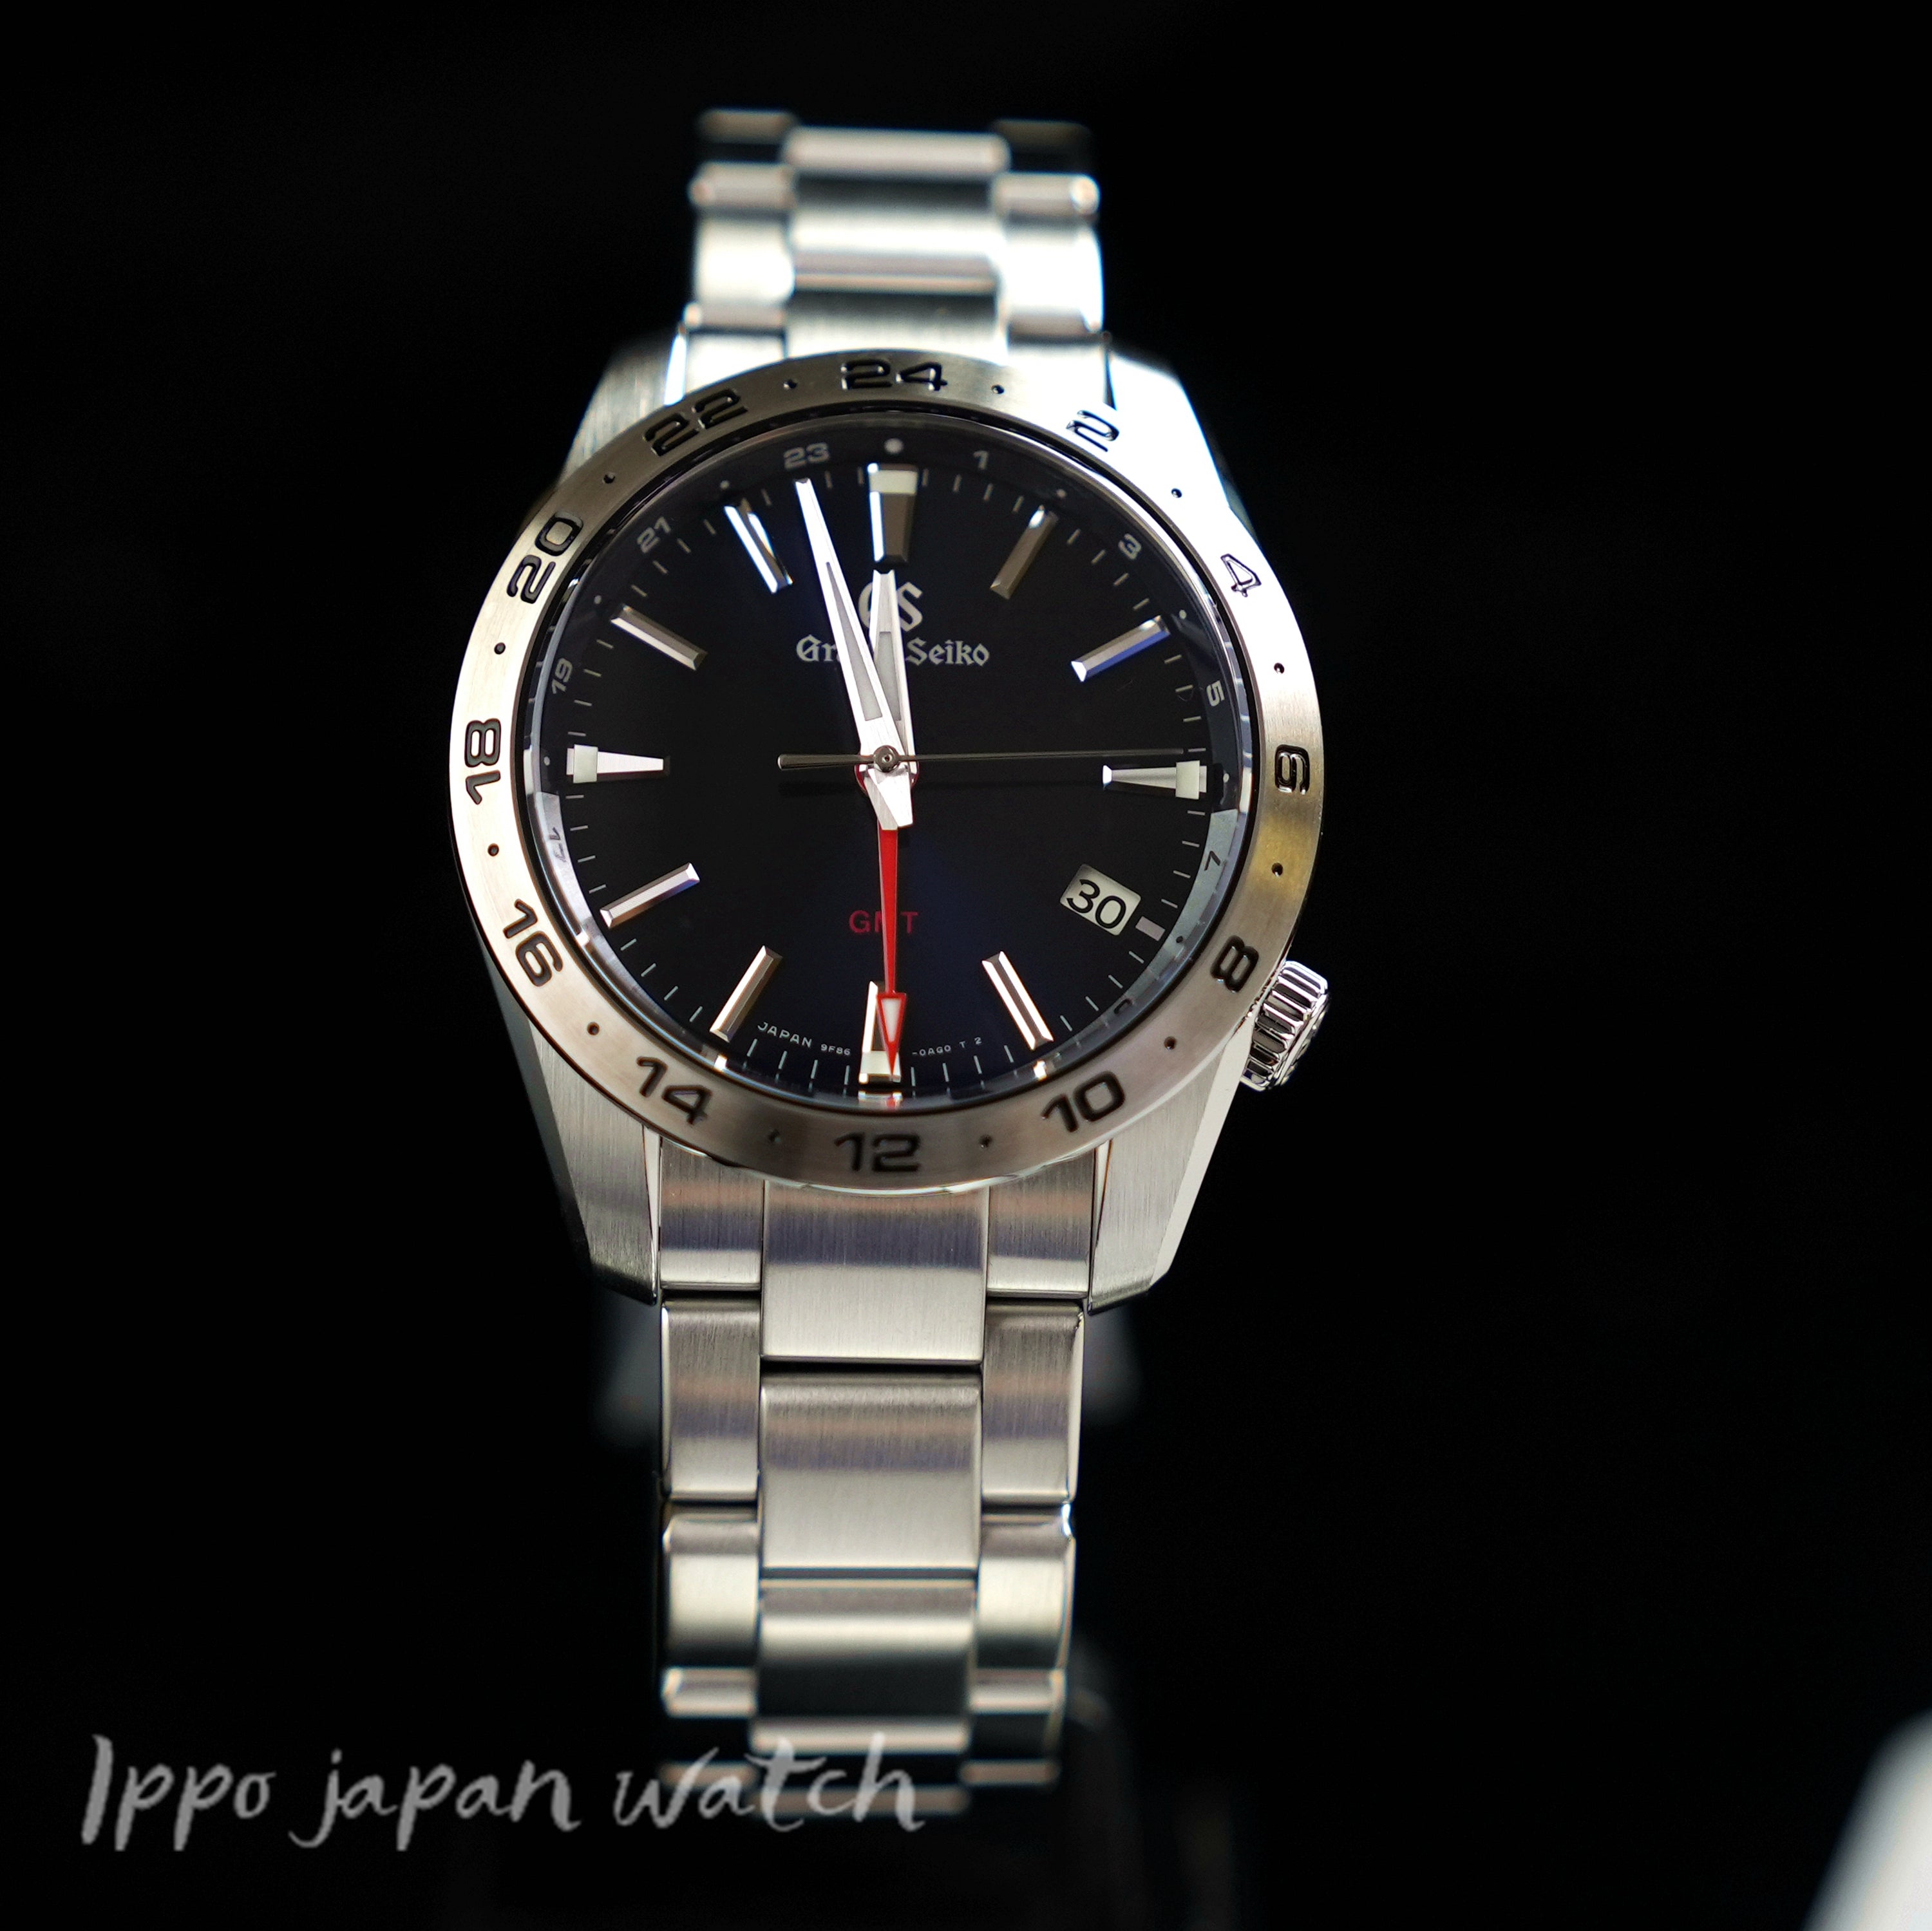 GRAND SEIKO Sport Collection SBGN029 9F86 WATCH - IPPO JAPAN WATCH 